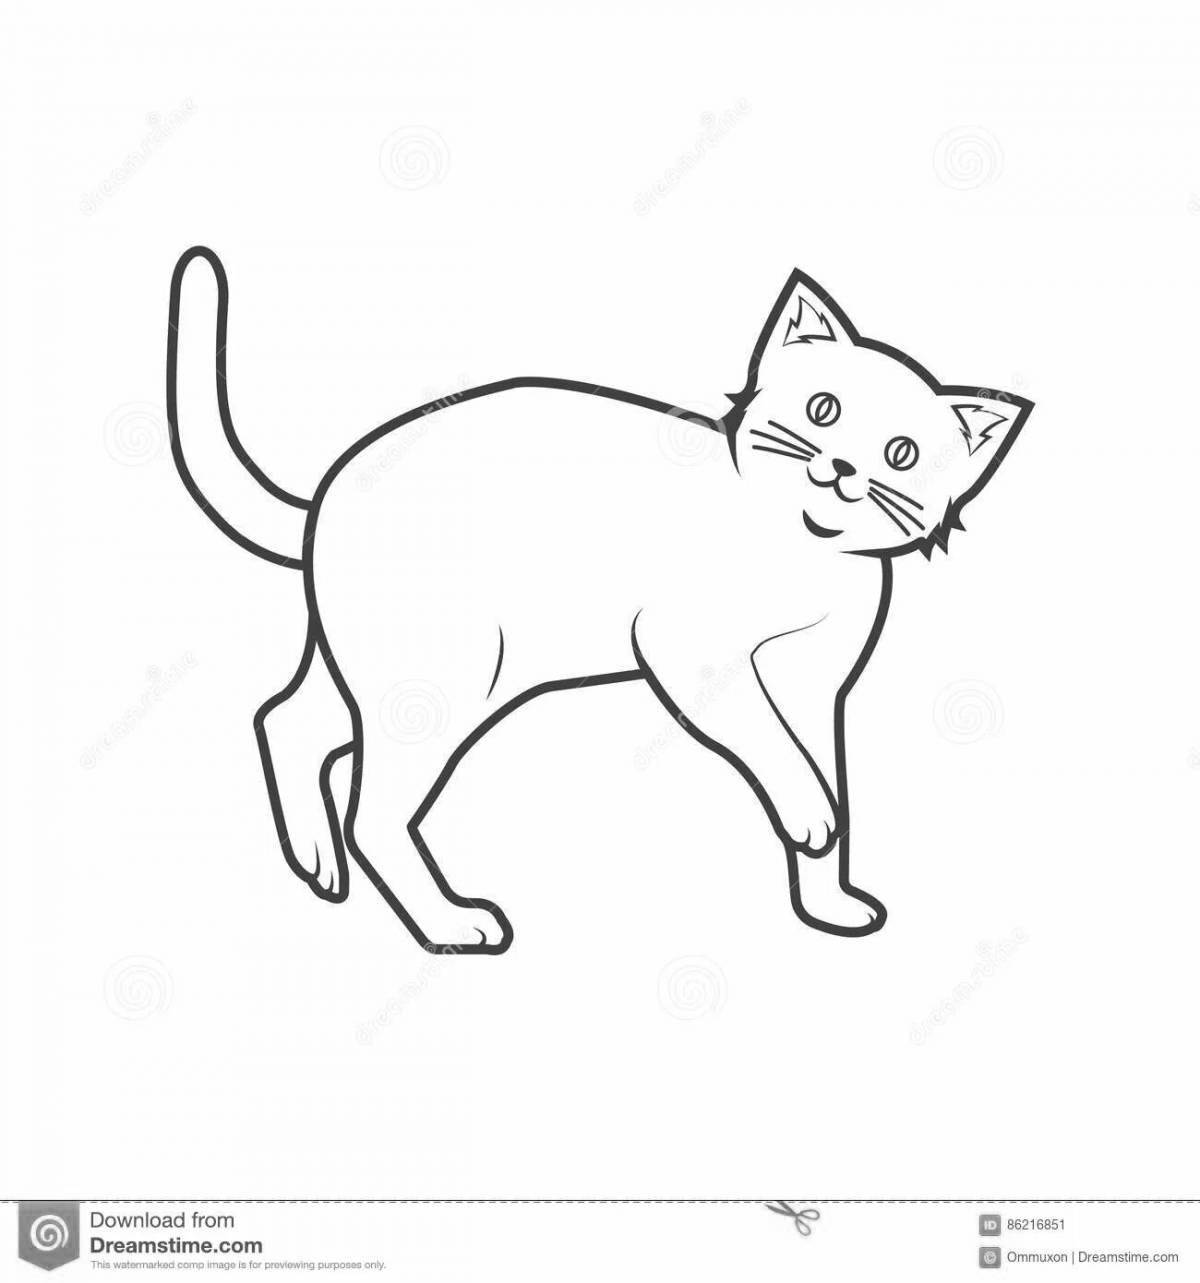 Раскраска ударная длинная кошка